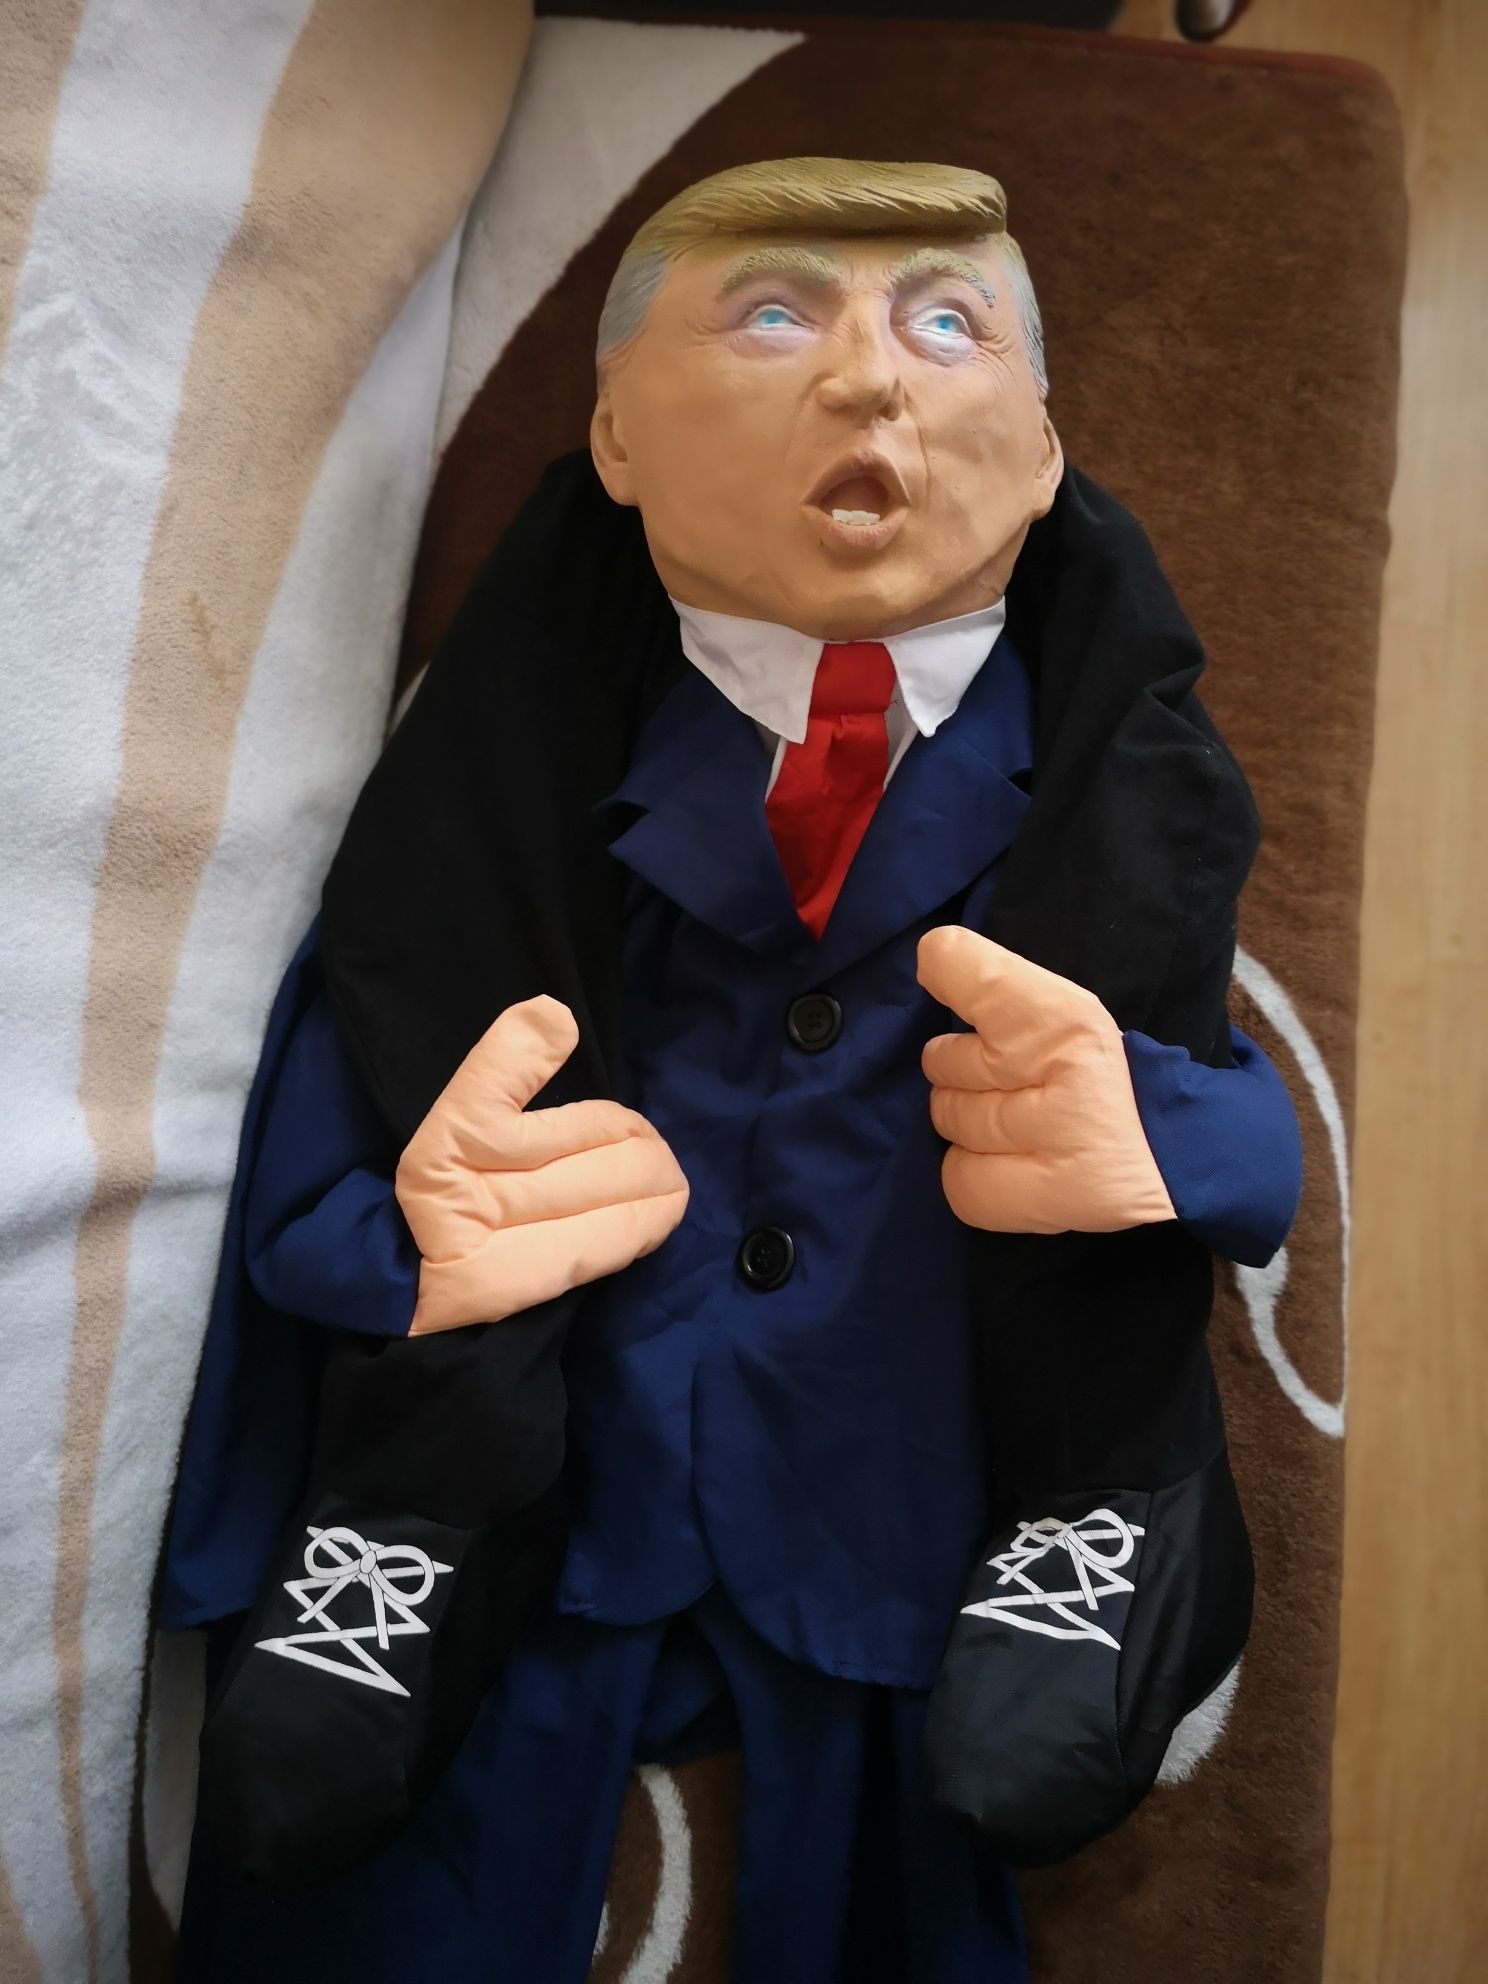 Kostium Donald Trump Morph Costumes uniwersalny rozmiar